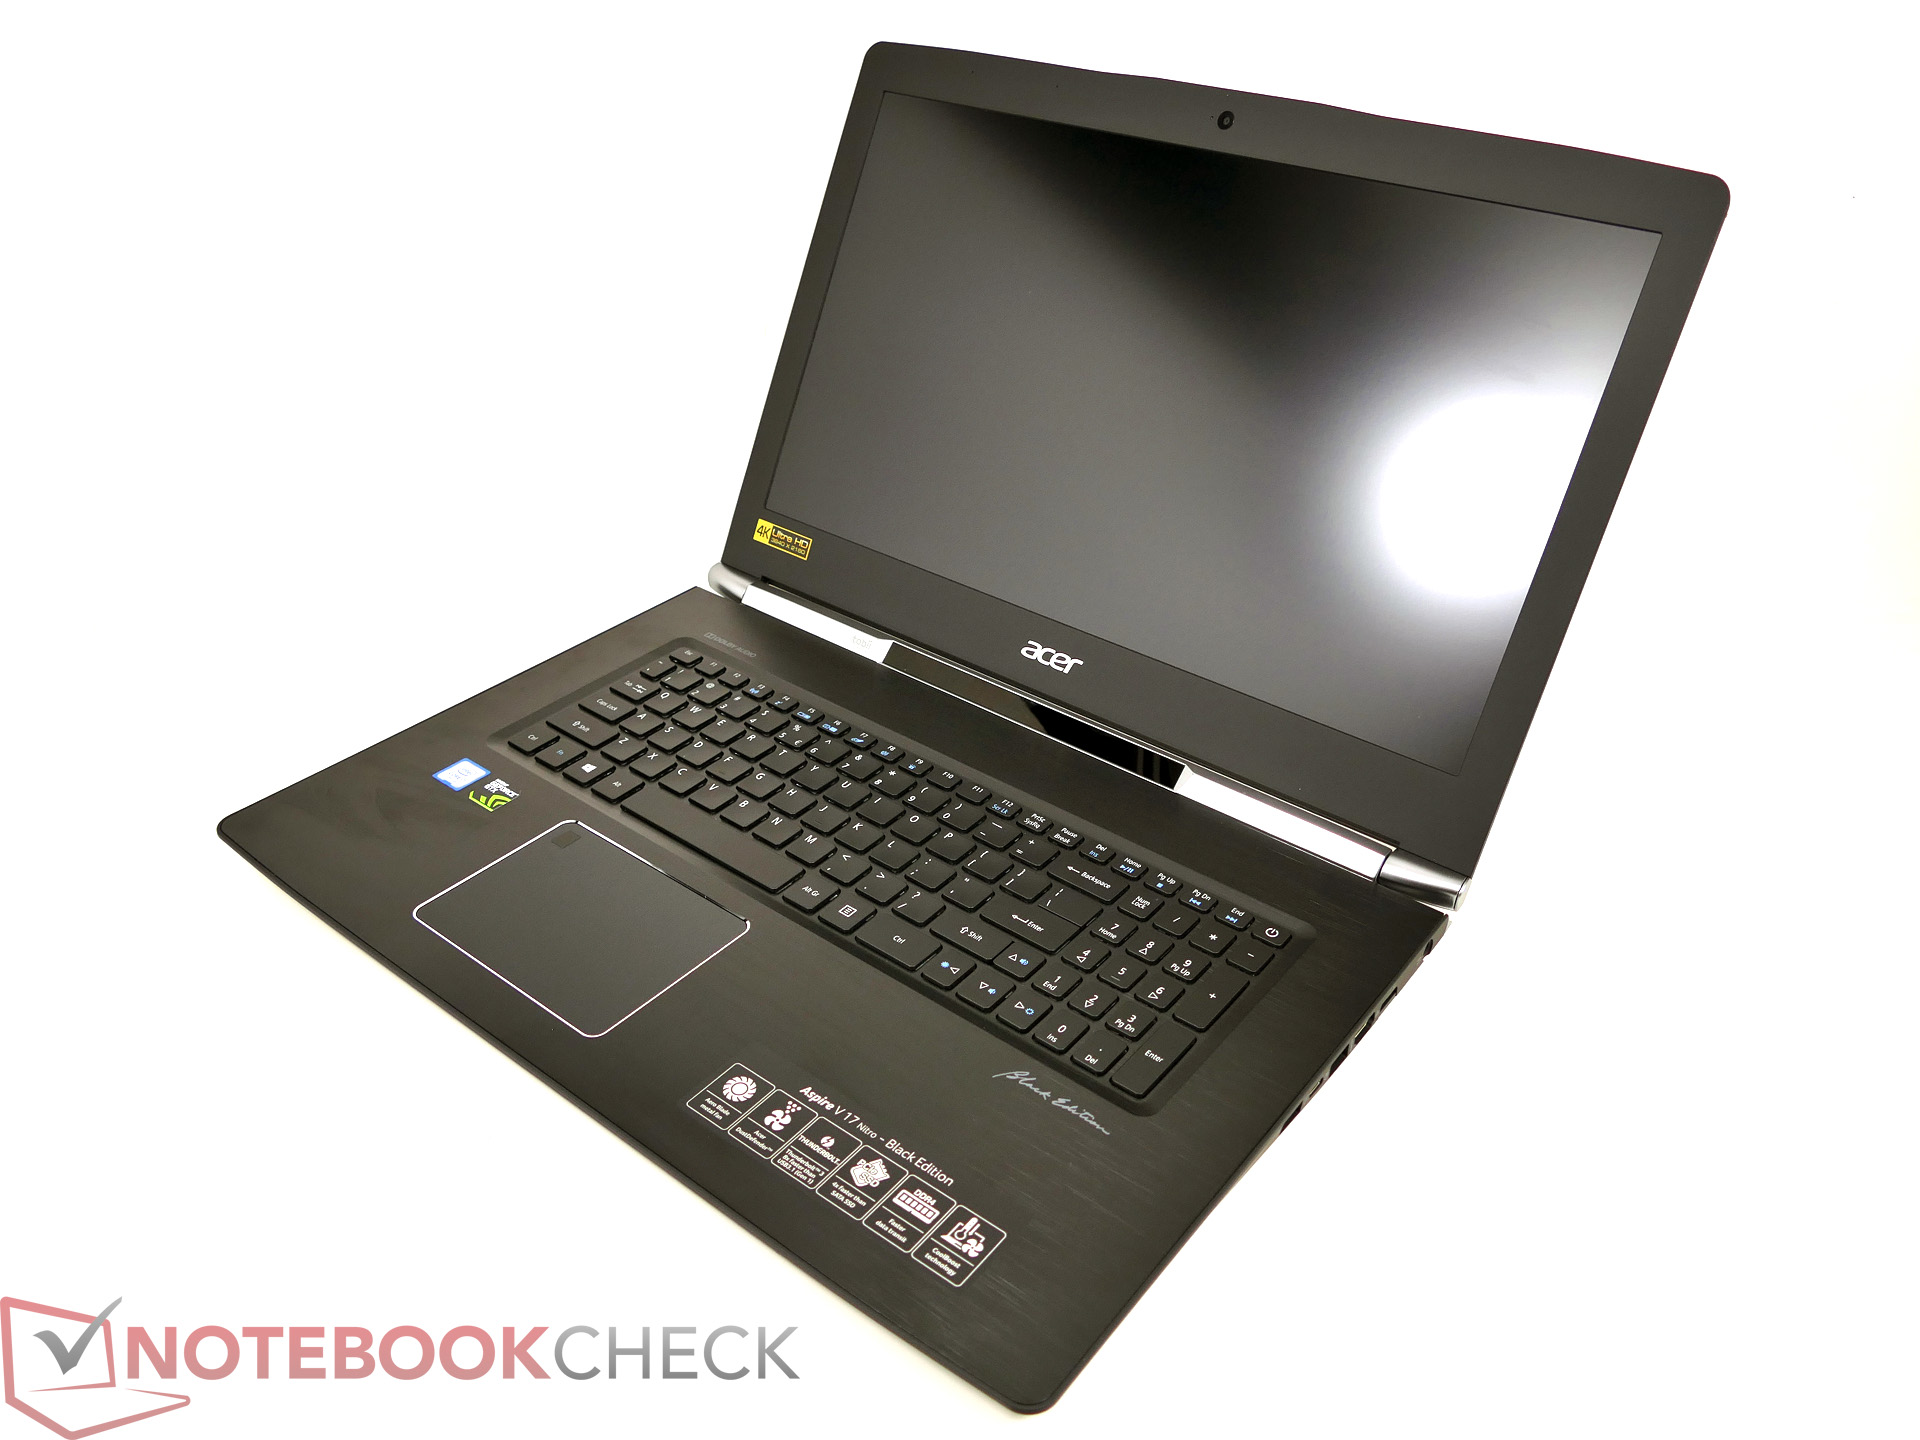 Gøre en indsats Pind let Acer Aspire V17 Nitro BE (7700HQ, GTX 1060, 4k) Laptop Review -  NotebookCheck.net Reviews